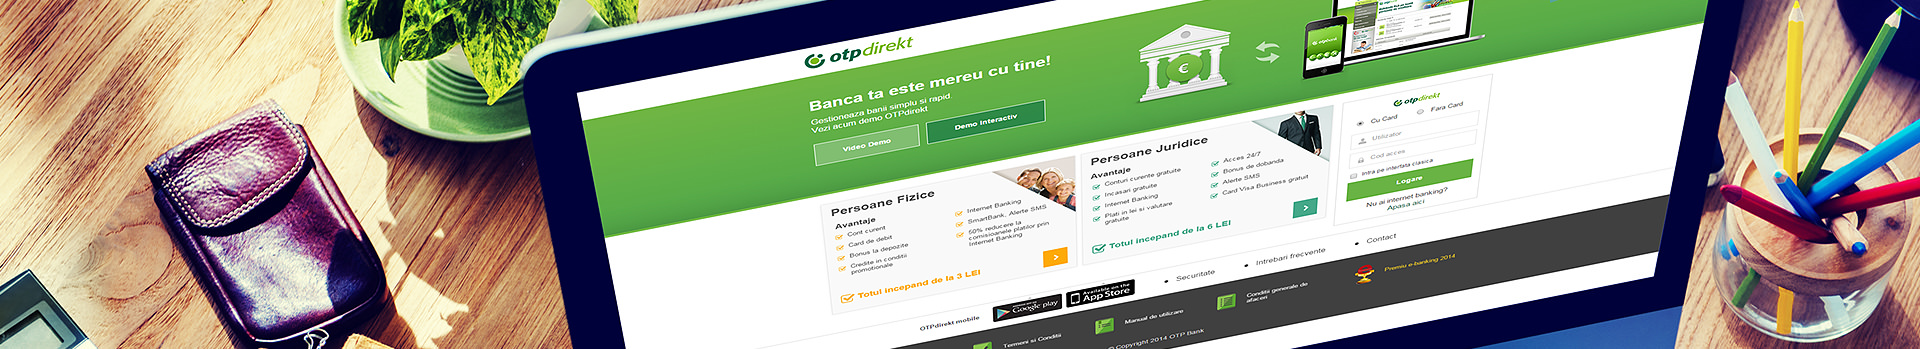 operatiuni-internet-banking